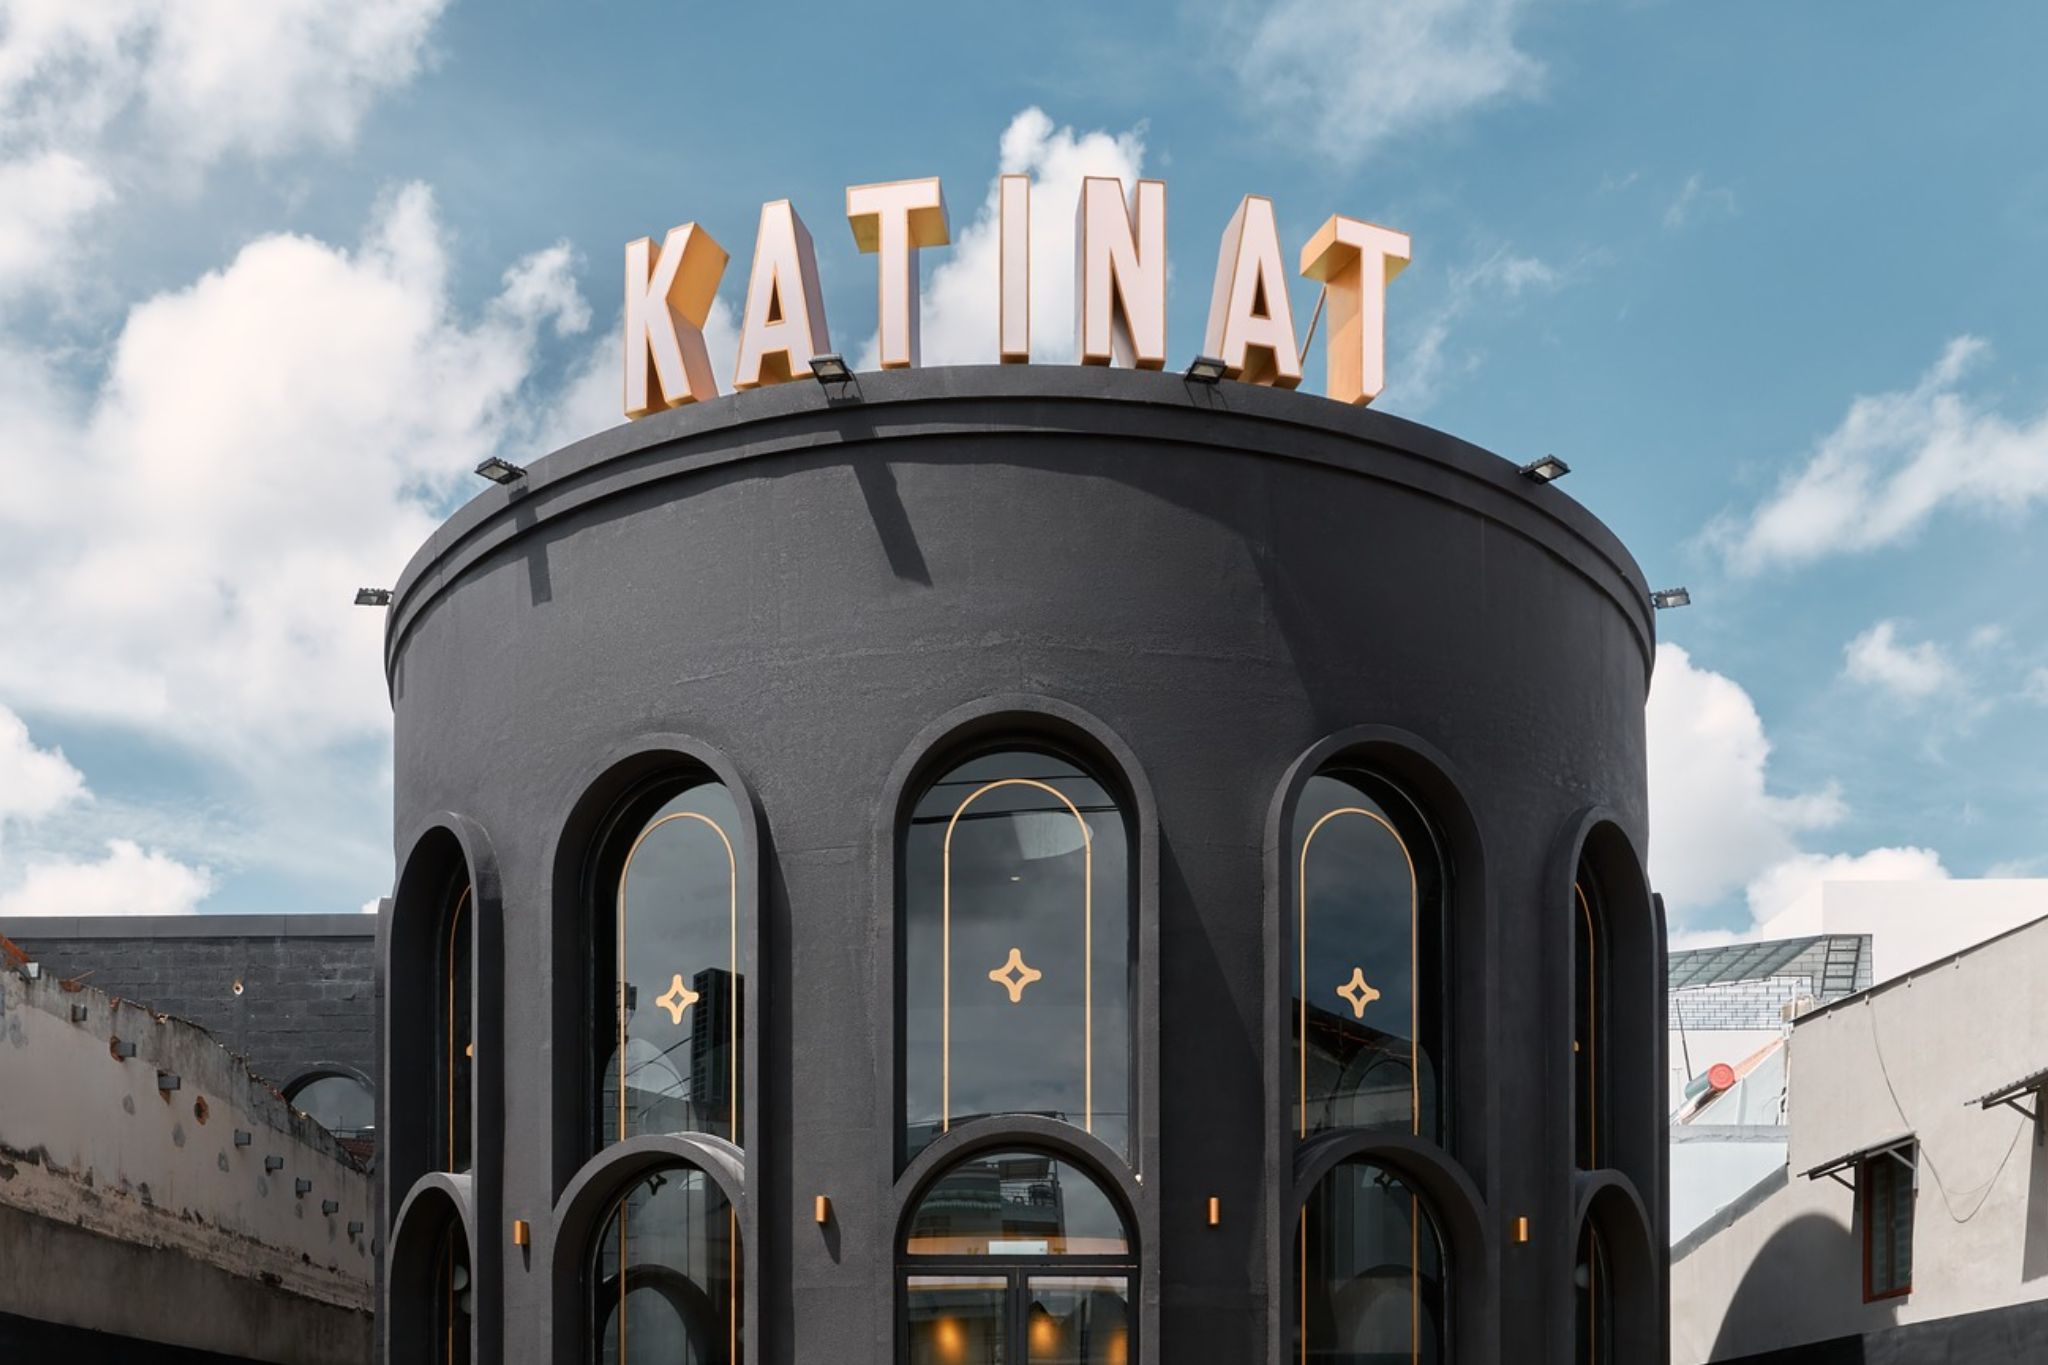 thiết kế Katinat Saigon Kafe